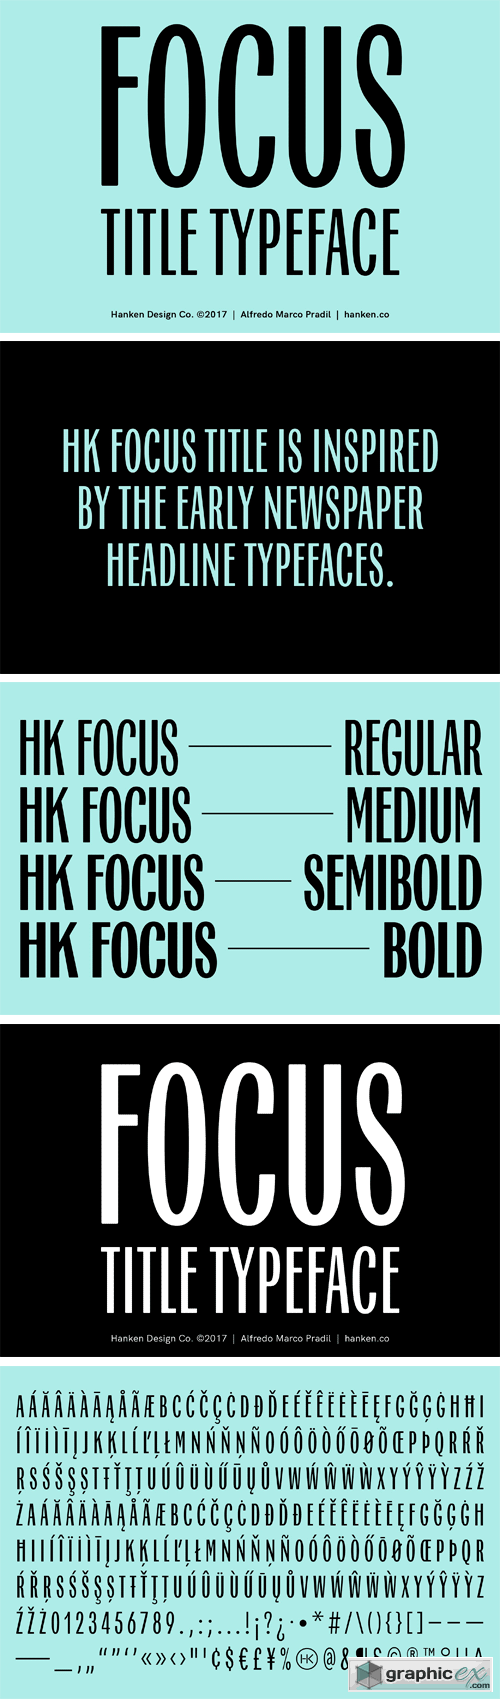 HK Focus Title